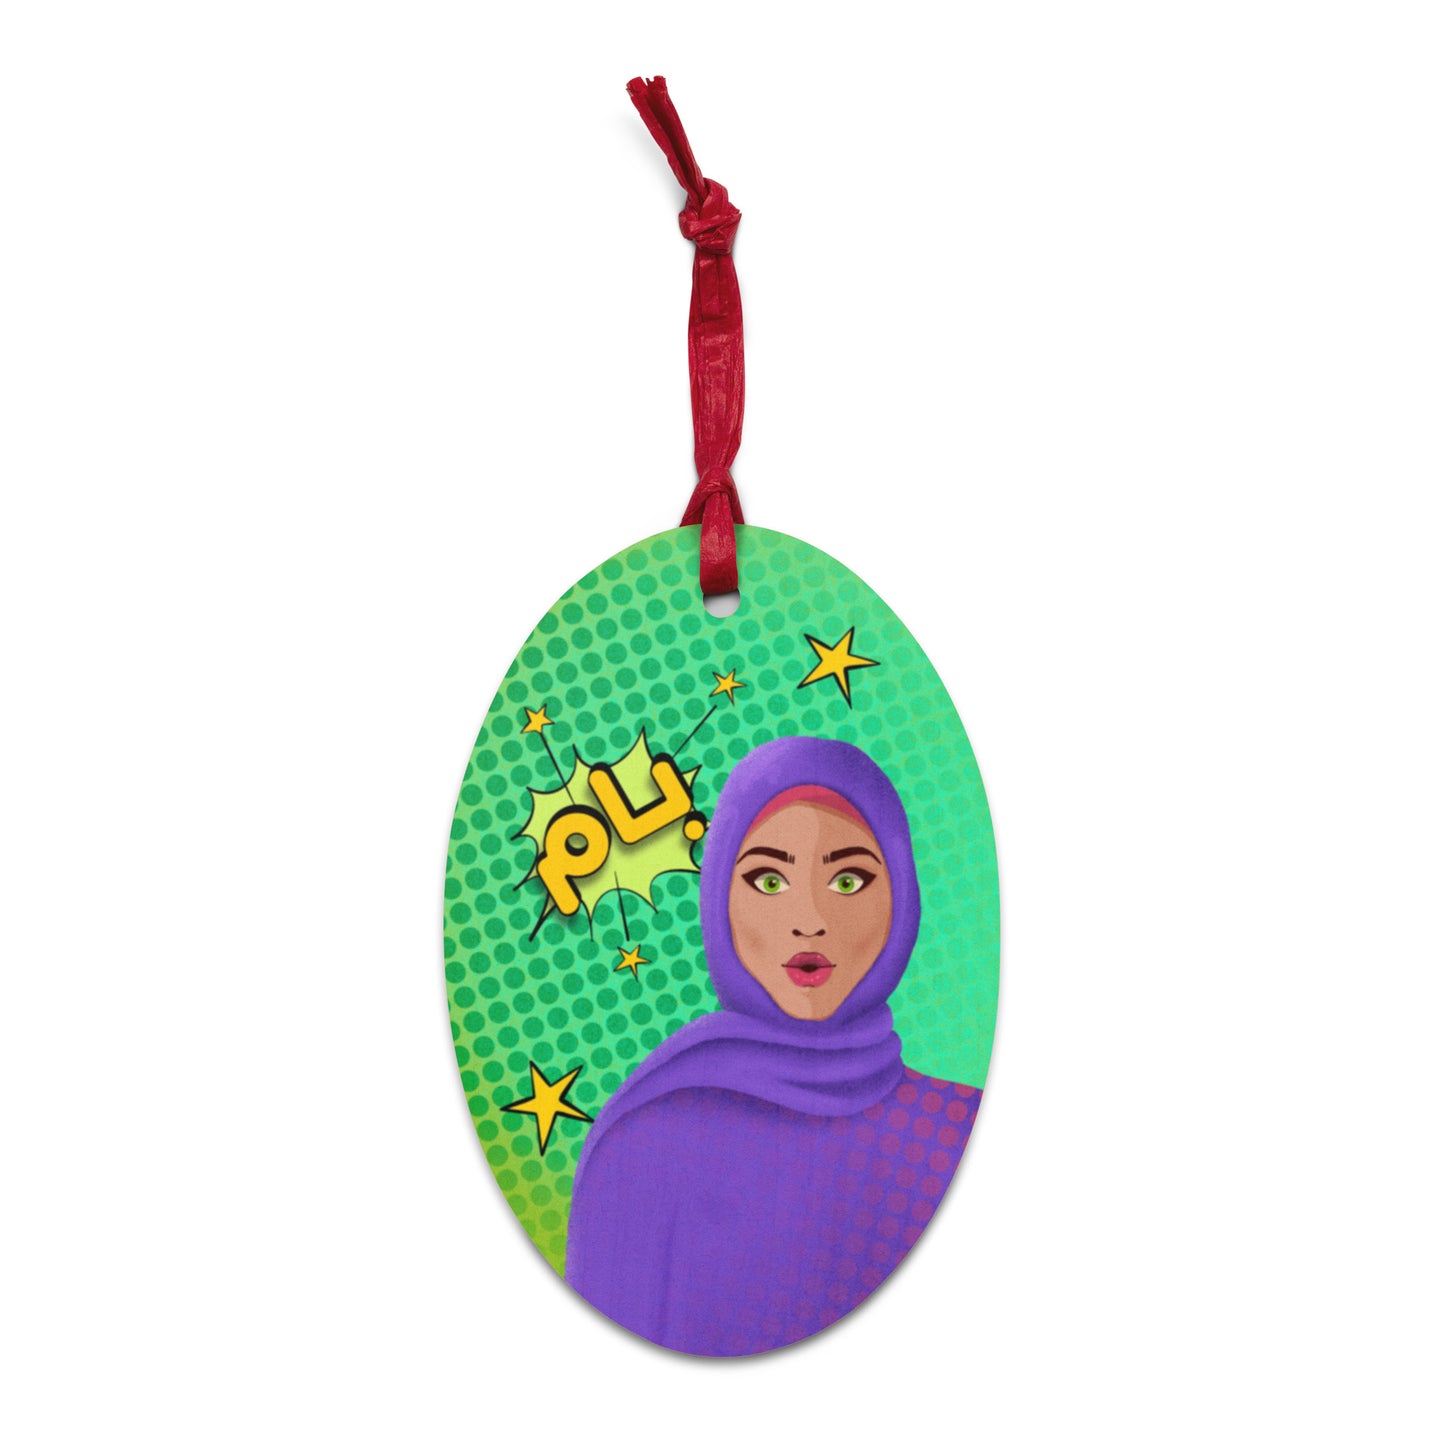 Wooden ornaments / magnet - Hijabi Pop Art Collection - Bam Pop